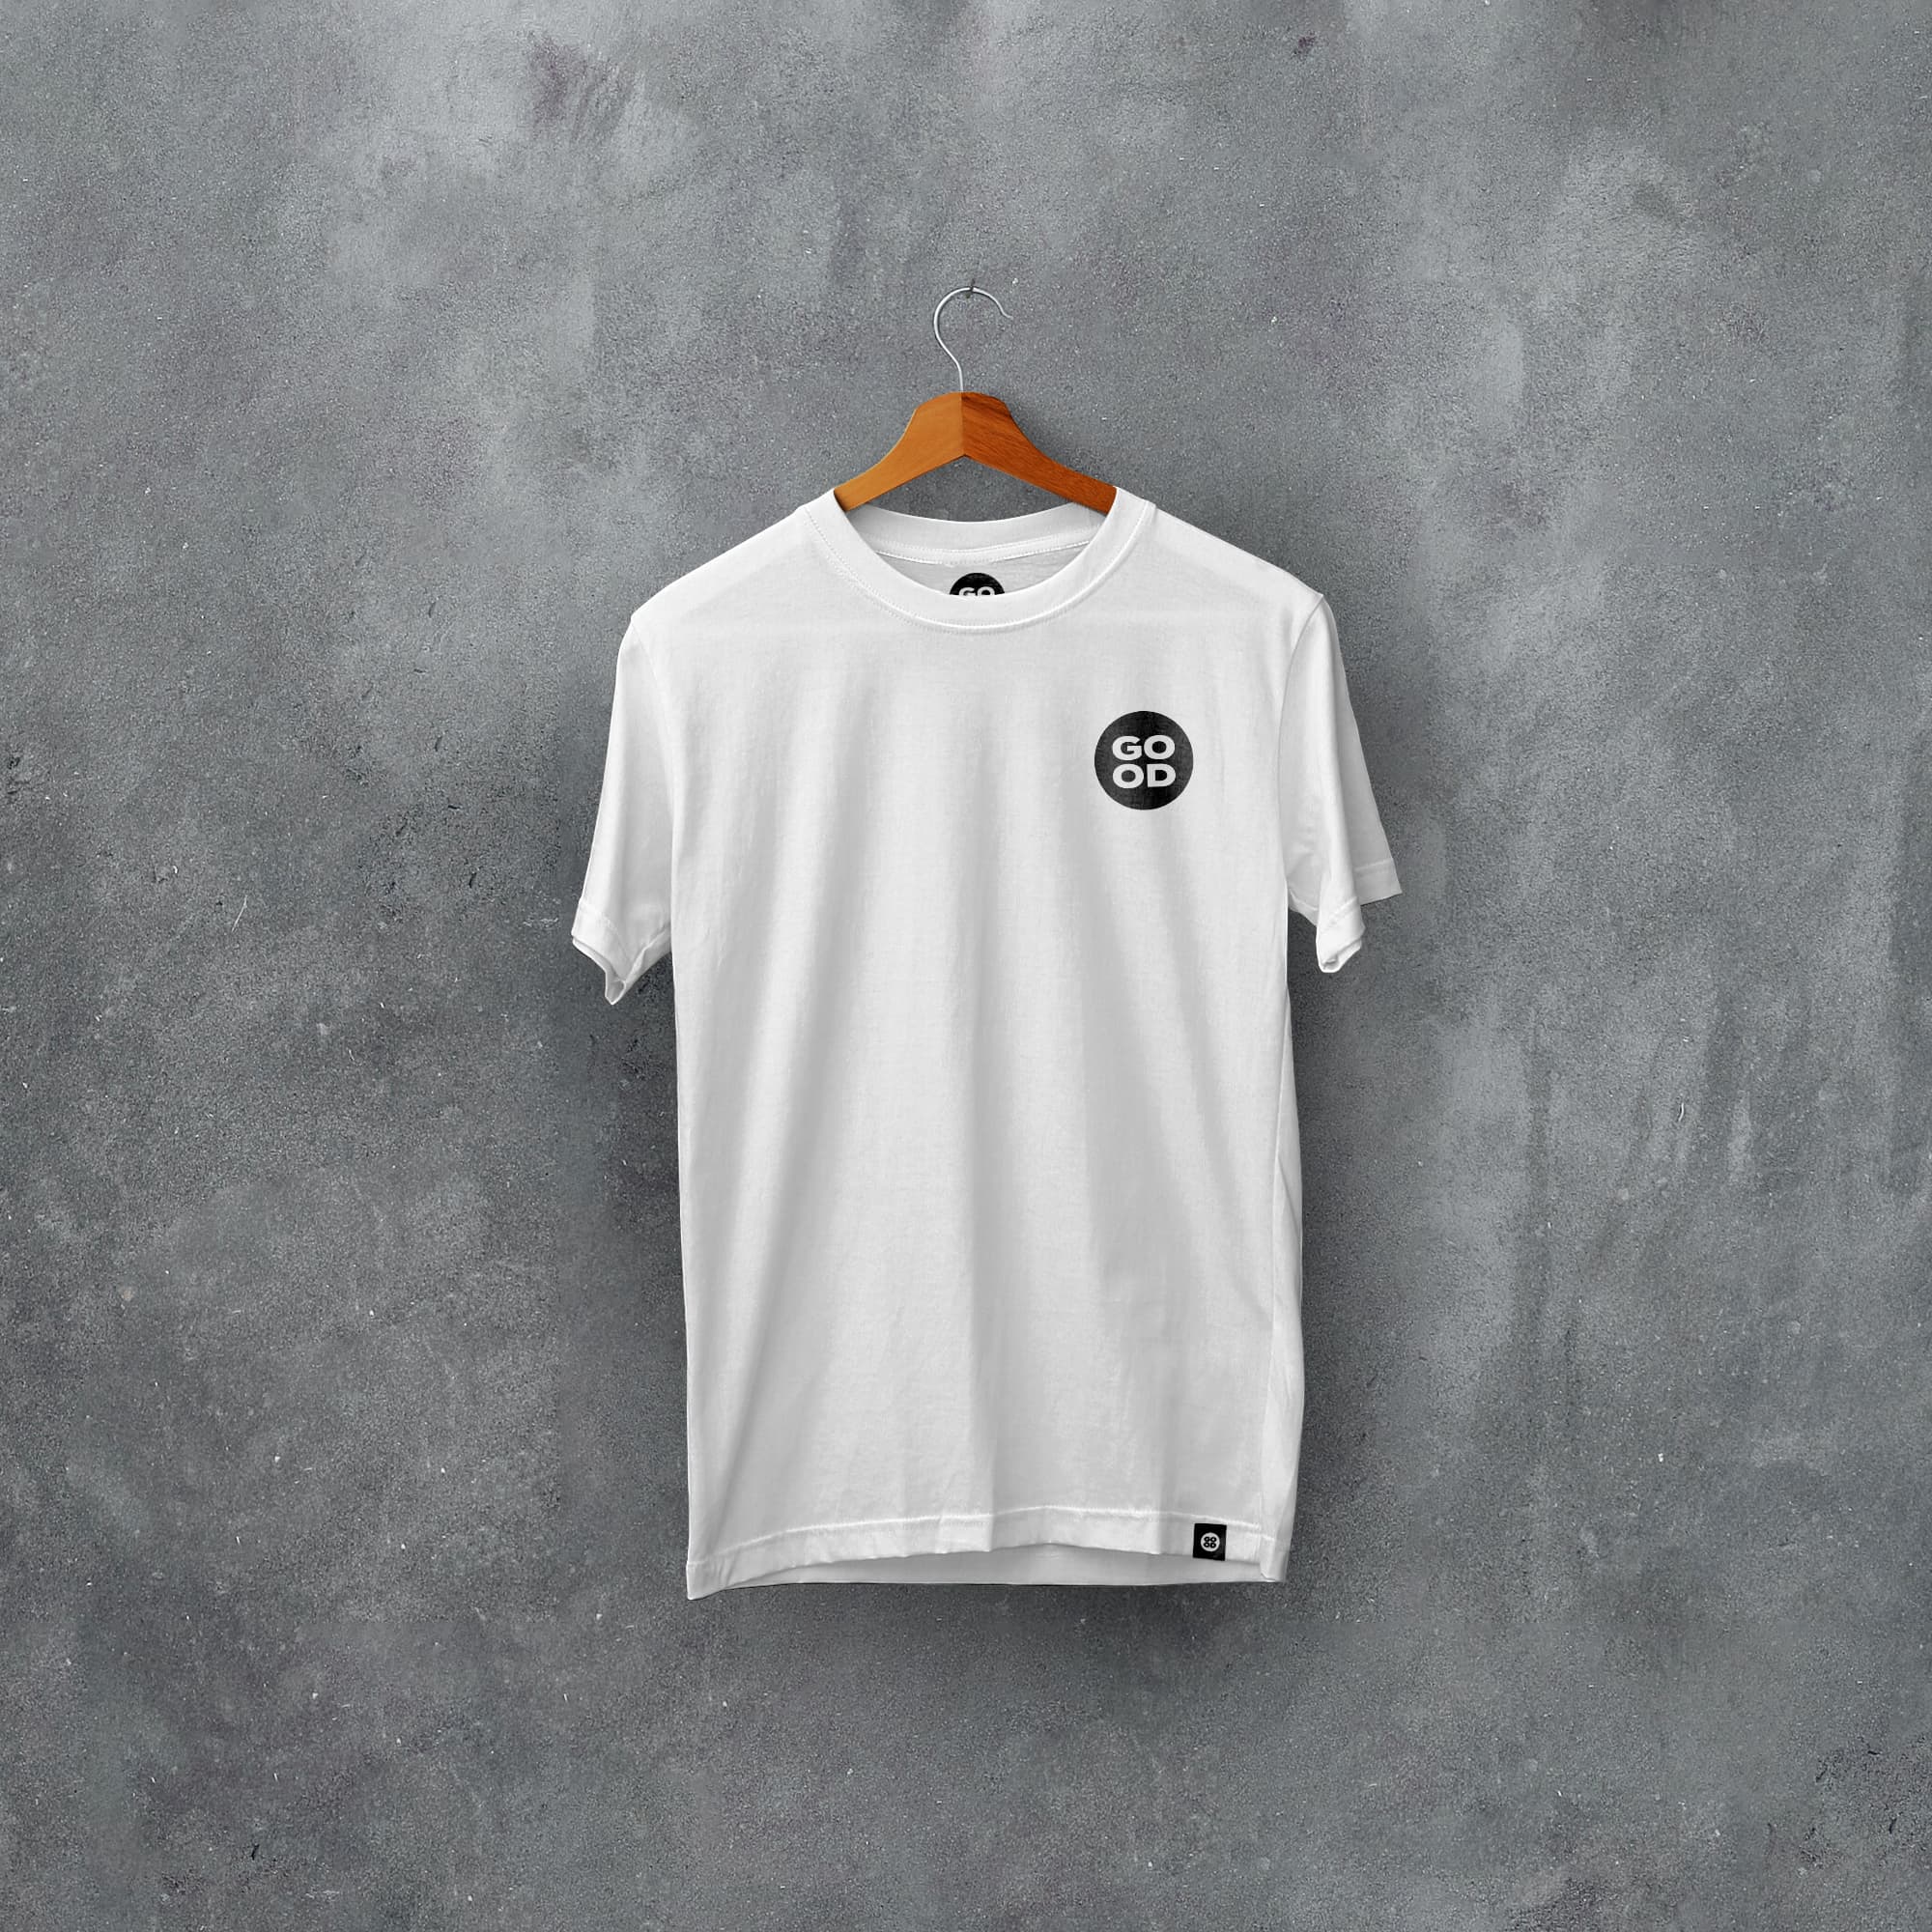 Chelmsford Classic Kits Football T-Shirt